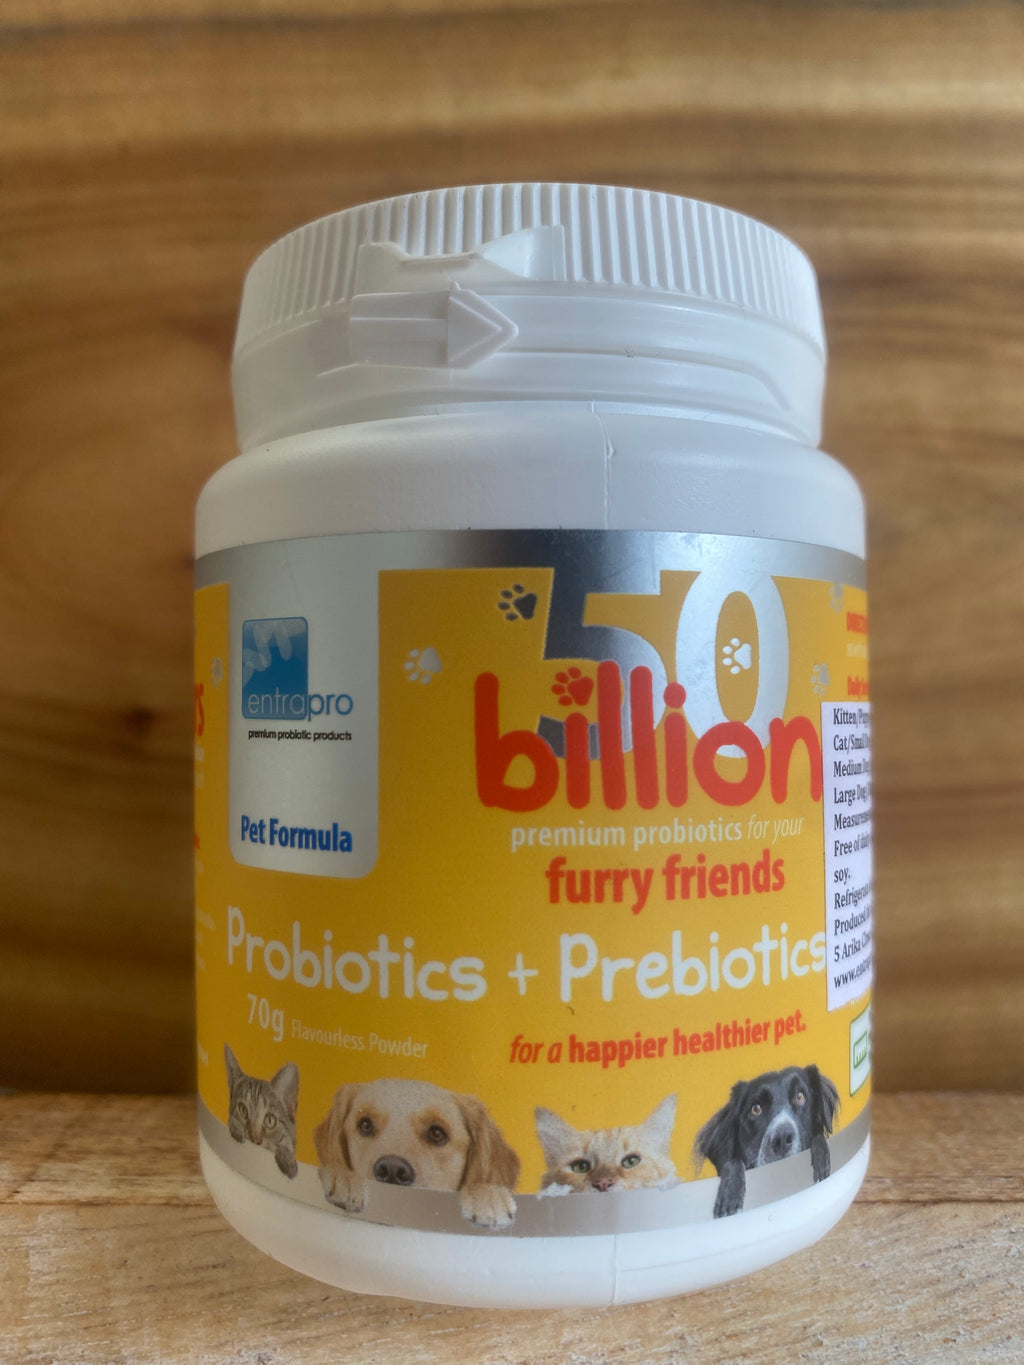 Entrapro live probiotic and prebiotic 50 billion 70g